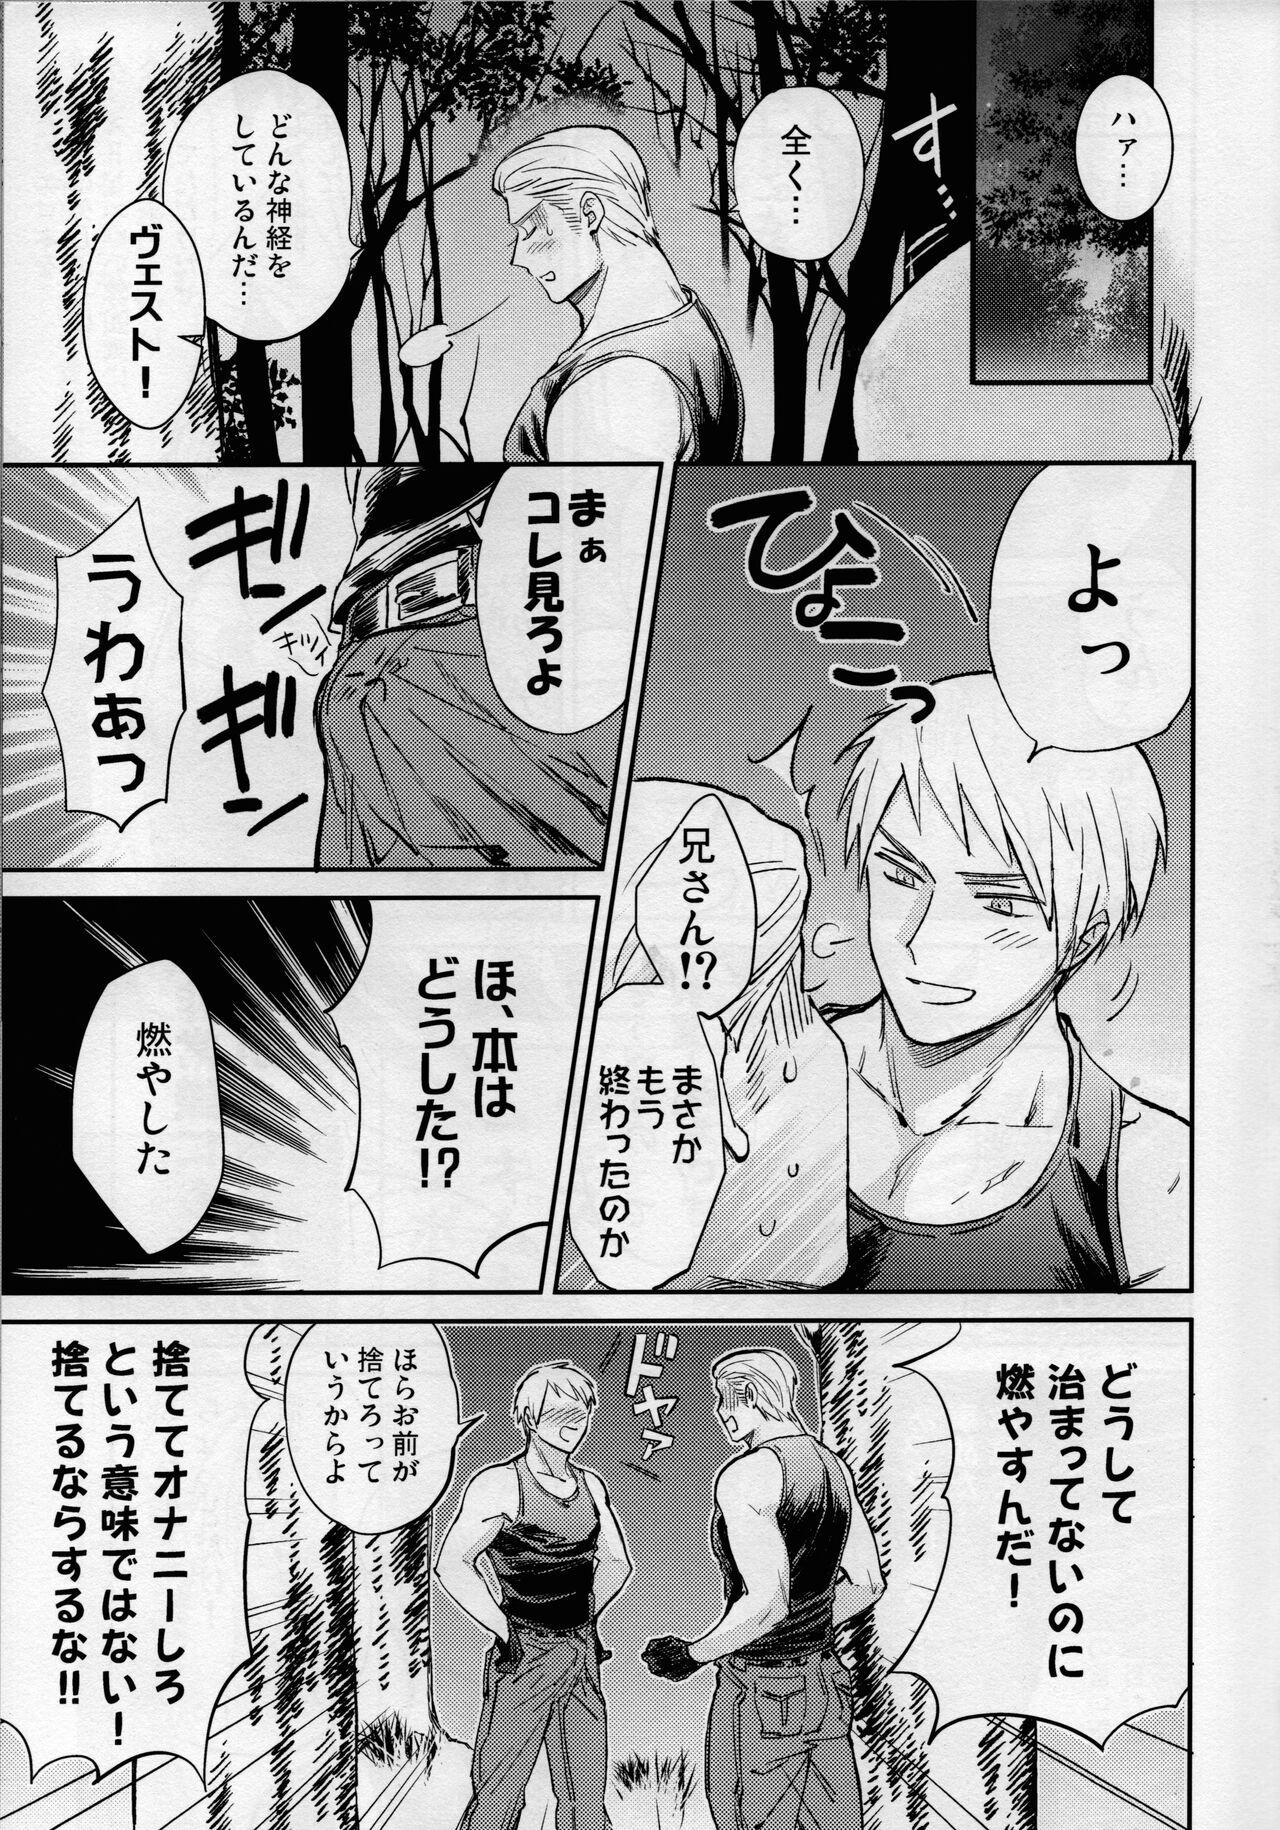 Ex Girlfriend Haadoru wa takakereba takai hodo kuguri yasui - Axis powers hetalia Pounded - Page 6